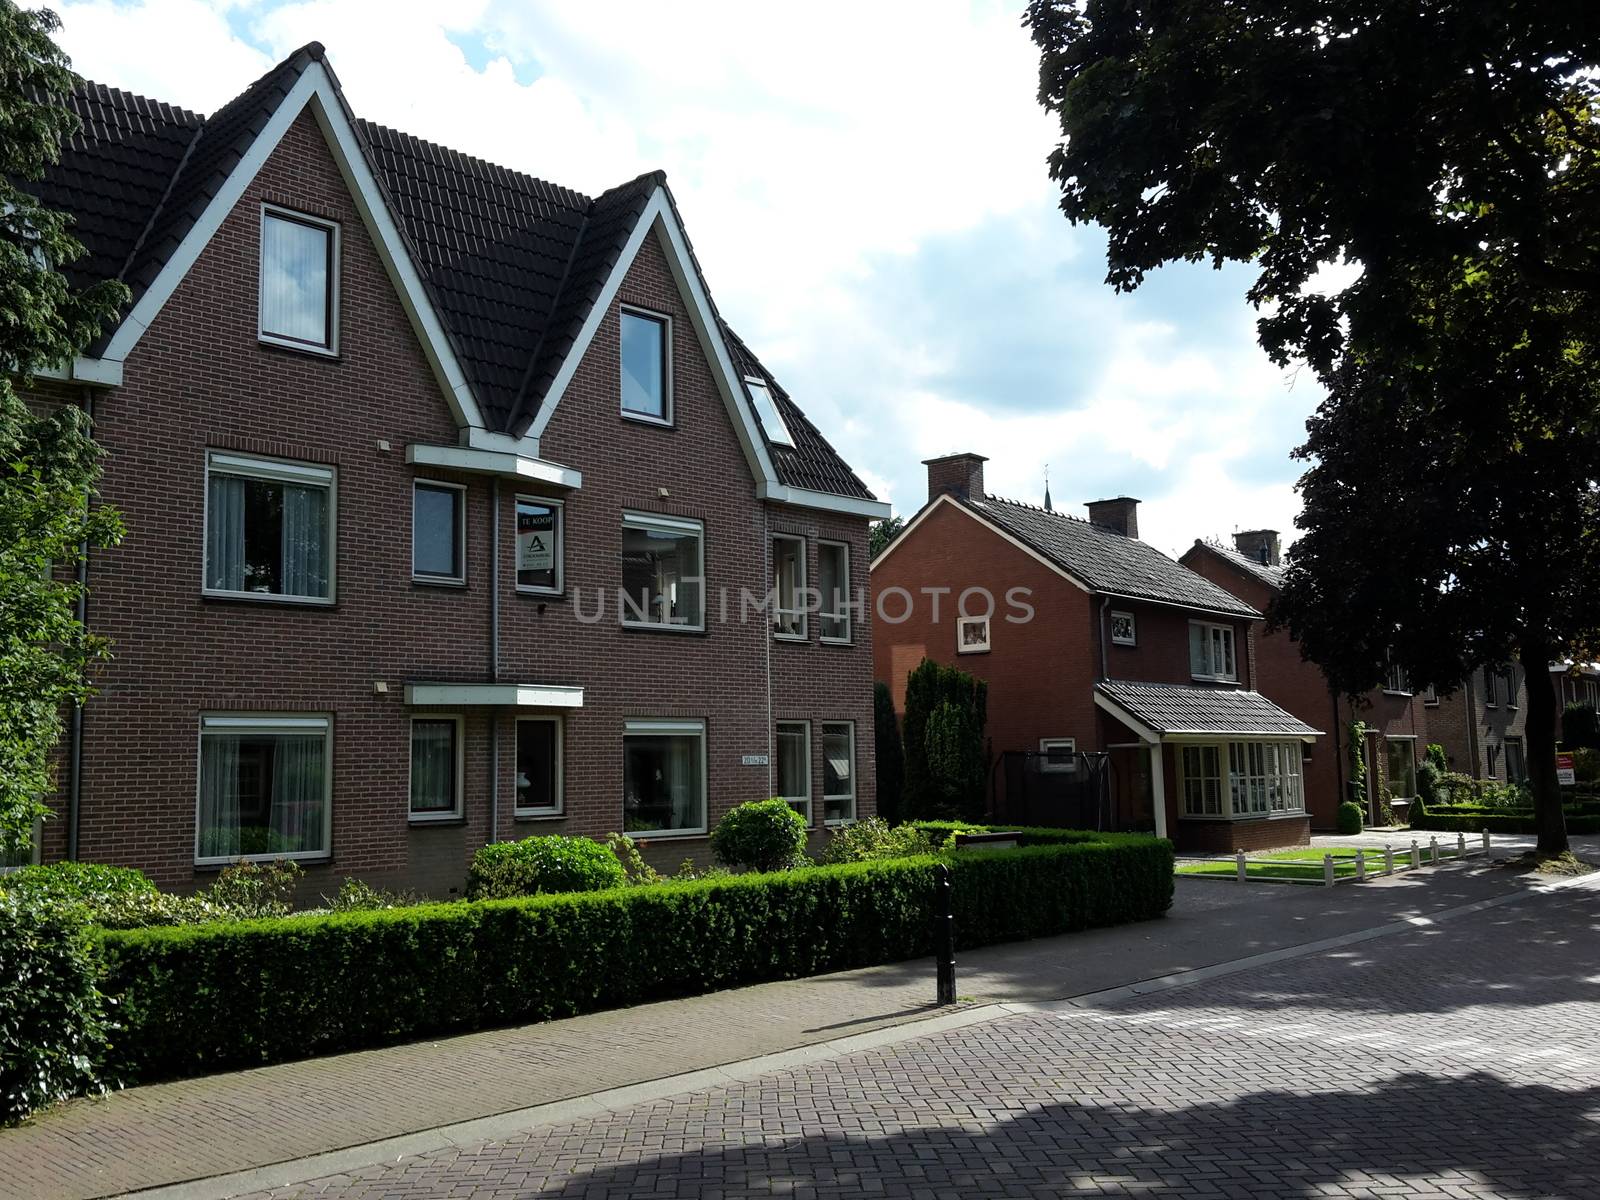 Lunteren, Netherlands - June 6, 2017 - The village of Lunteren in County Ede in the Netherlands